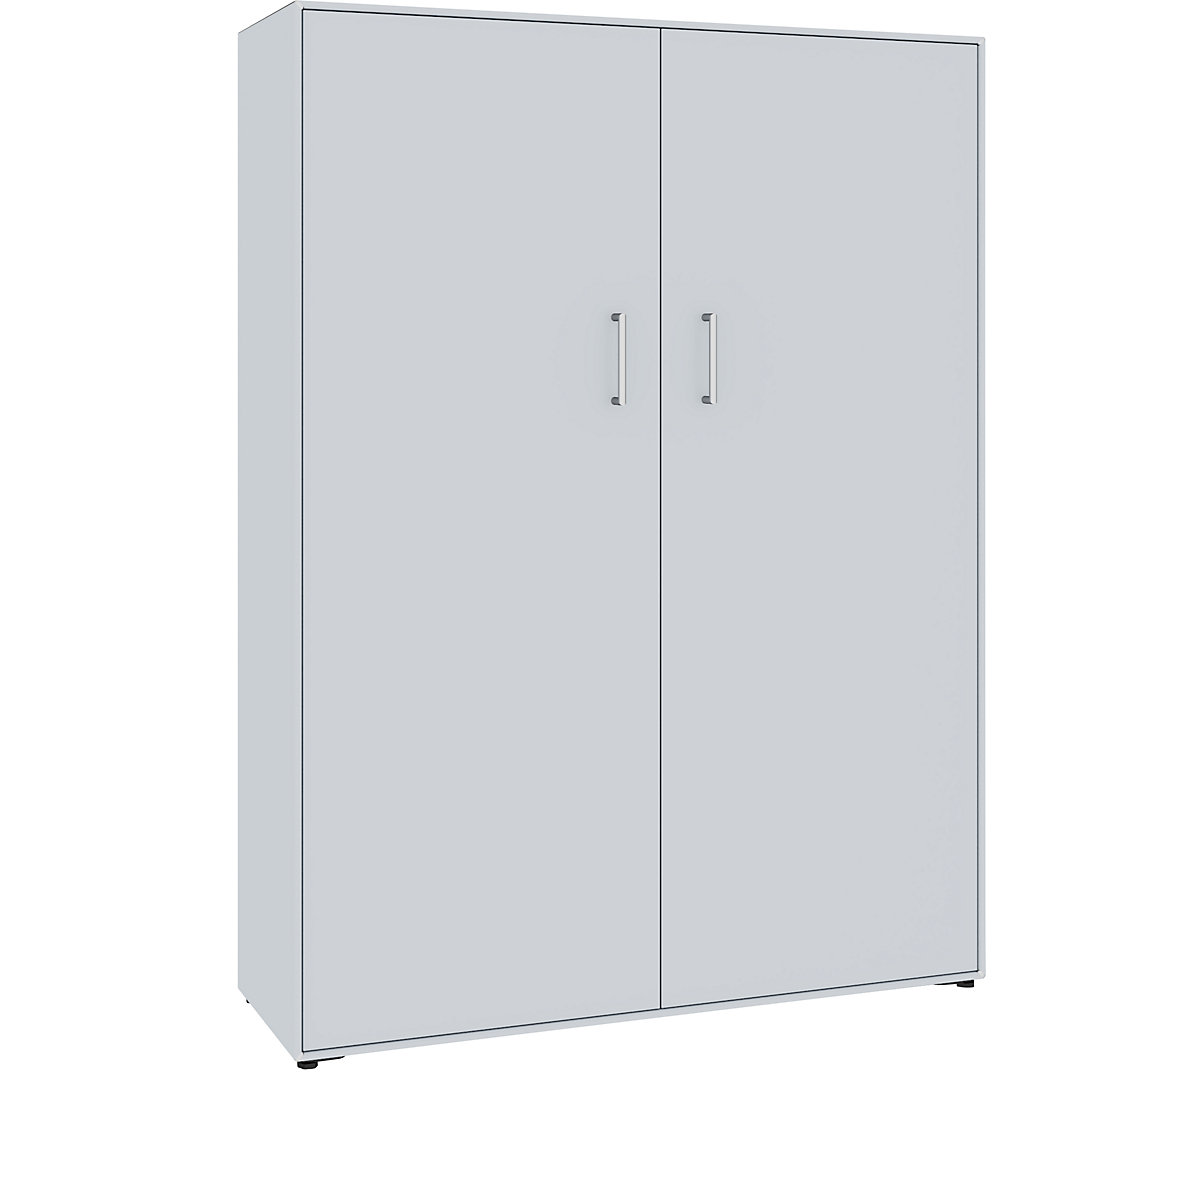 mauser – Dulap cu uși cu canaturi, 2 uși, 8 compartimente, lățime 1155 mm, alb aluminiu